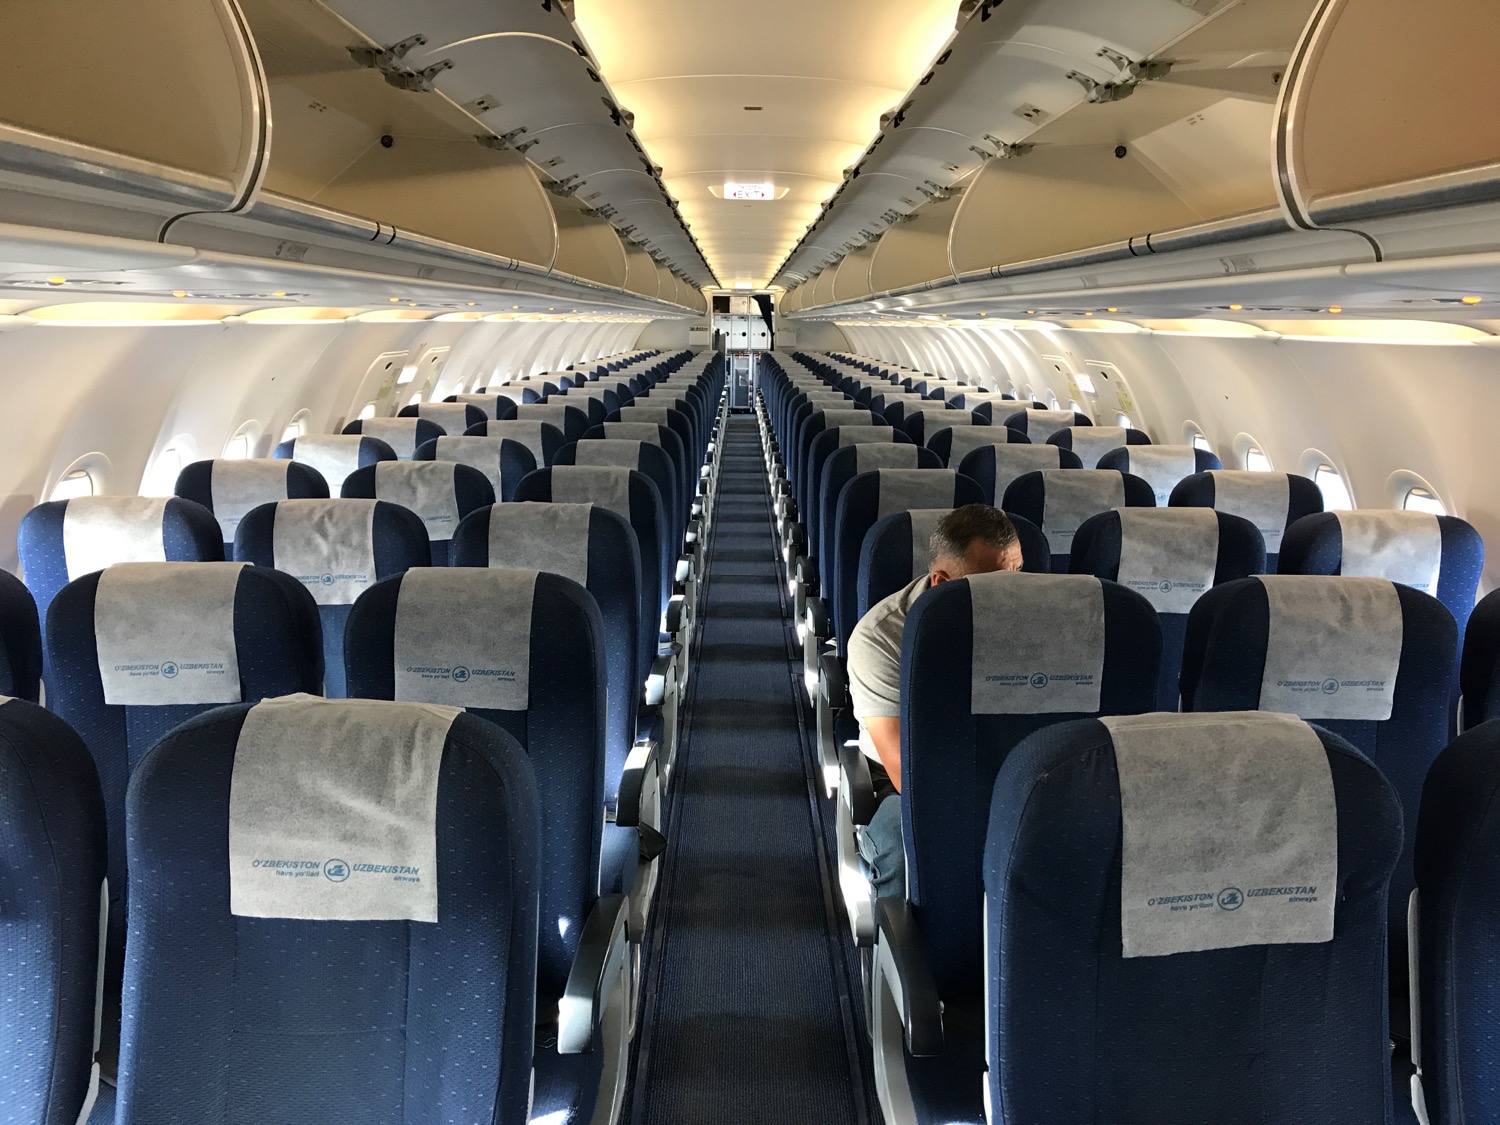 a man sitting in an airplane